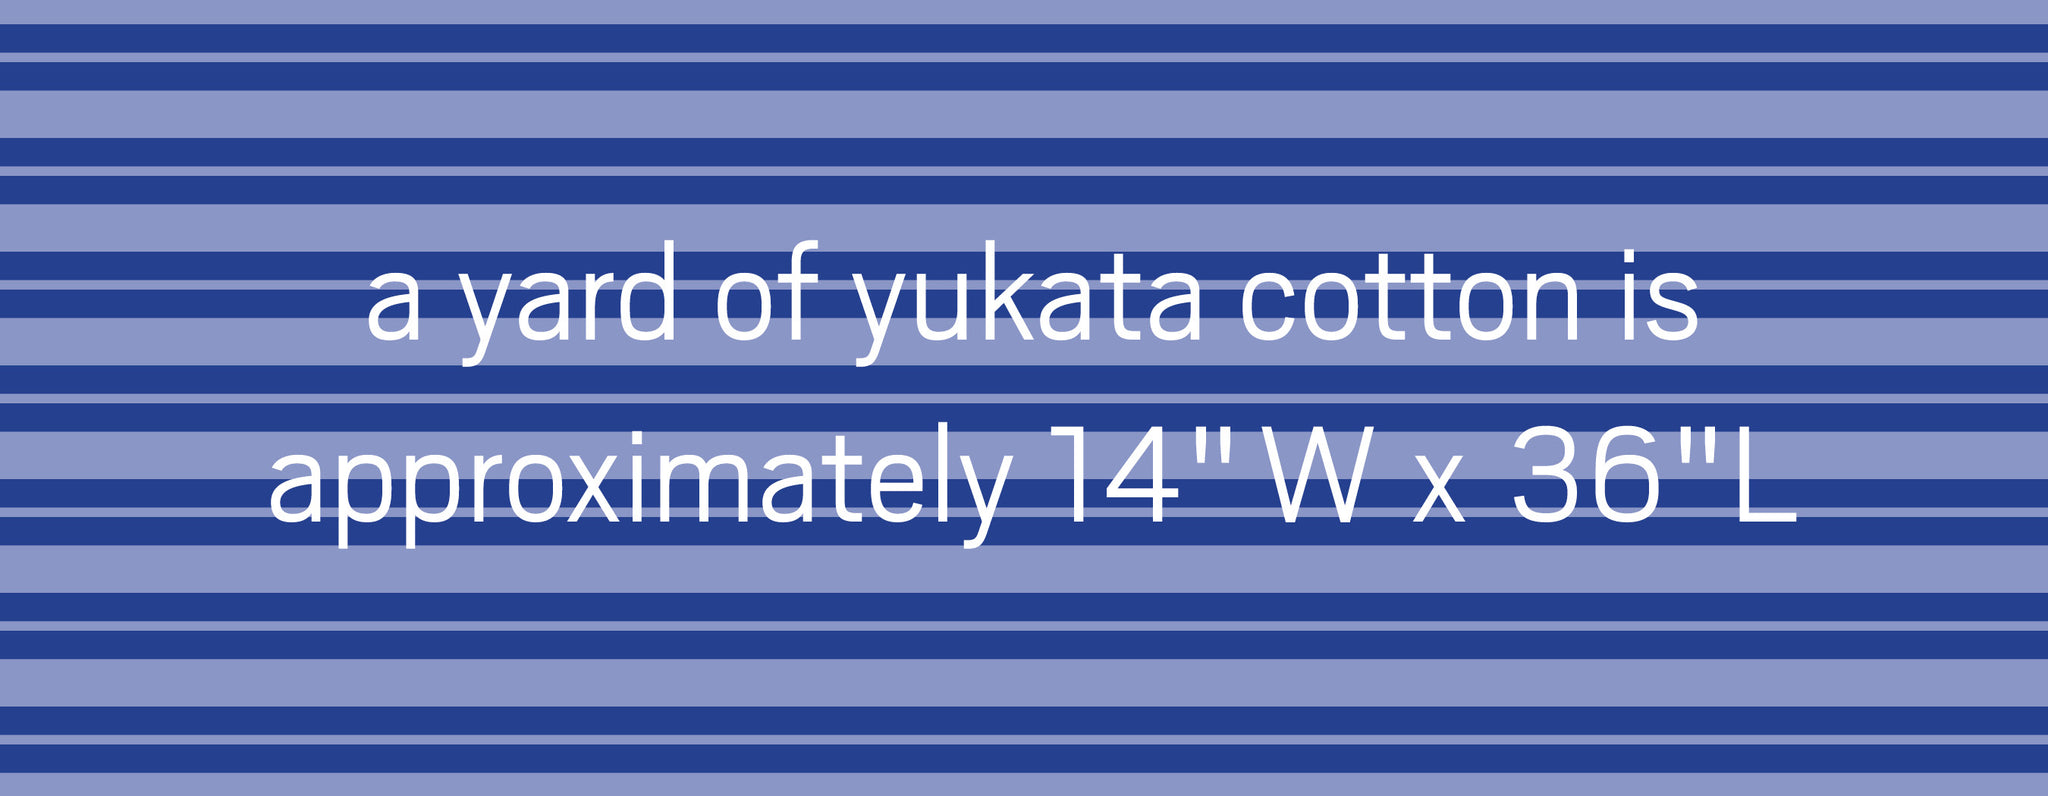 One yard of yukata cotton is approximately 14" W x 36"L